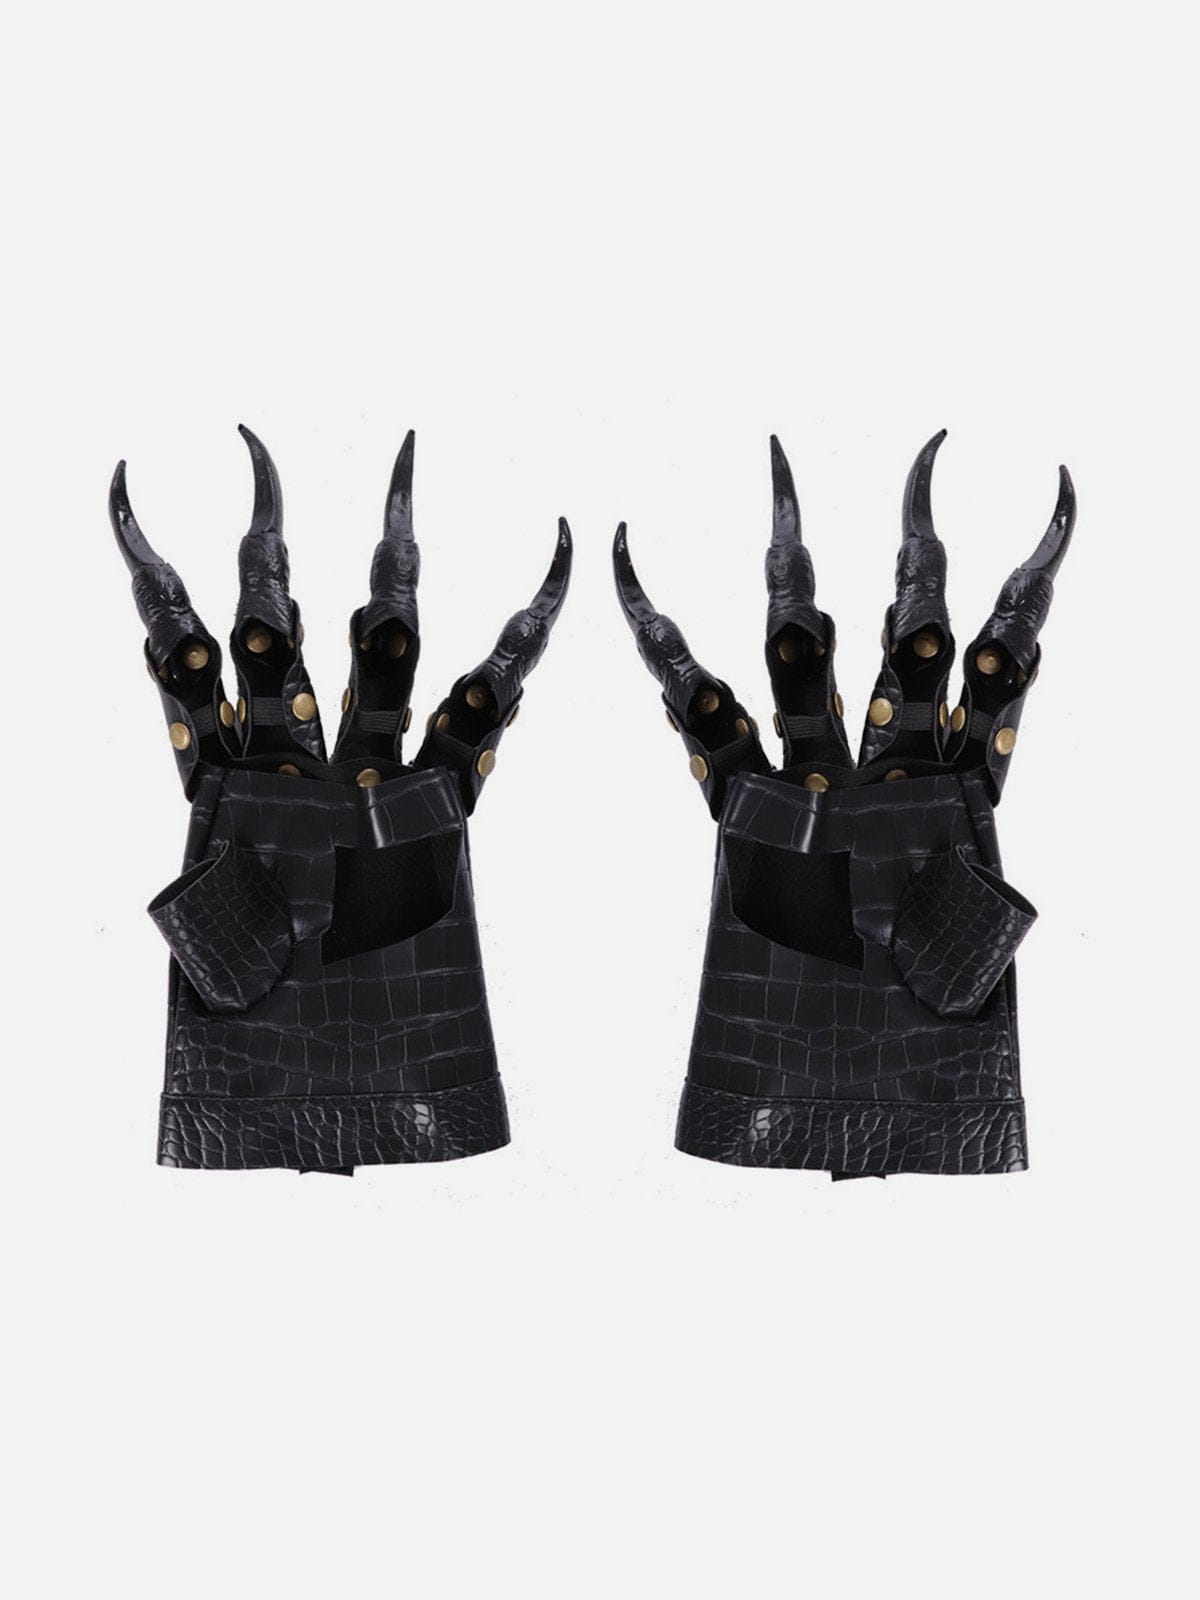 NEV Demon Witch Beast Black Claw Gloves